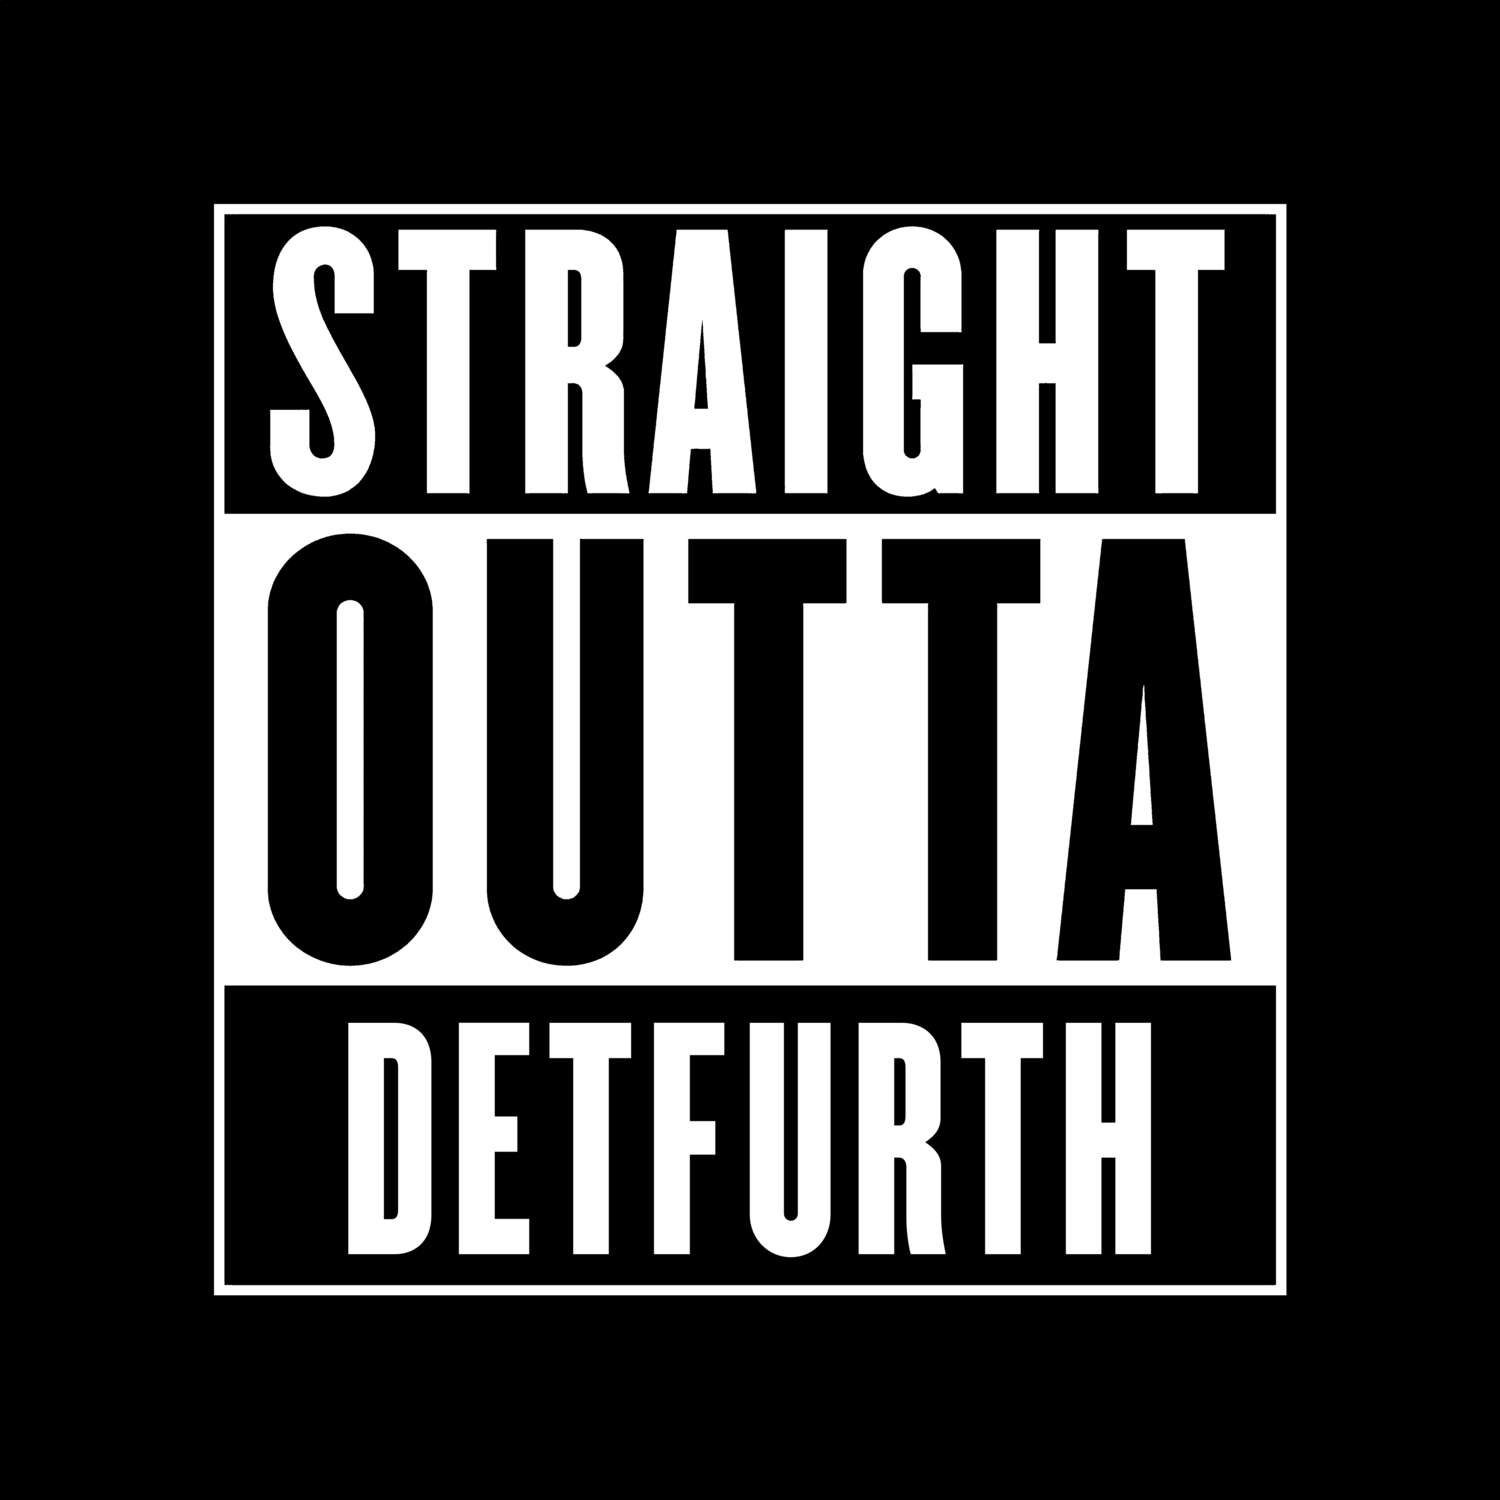 Detfurth T-Shirt »Straight Outta«